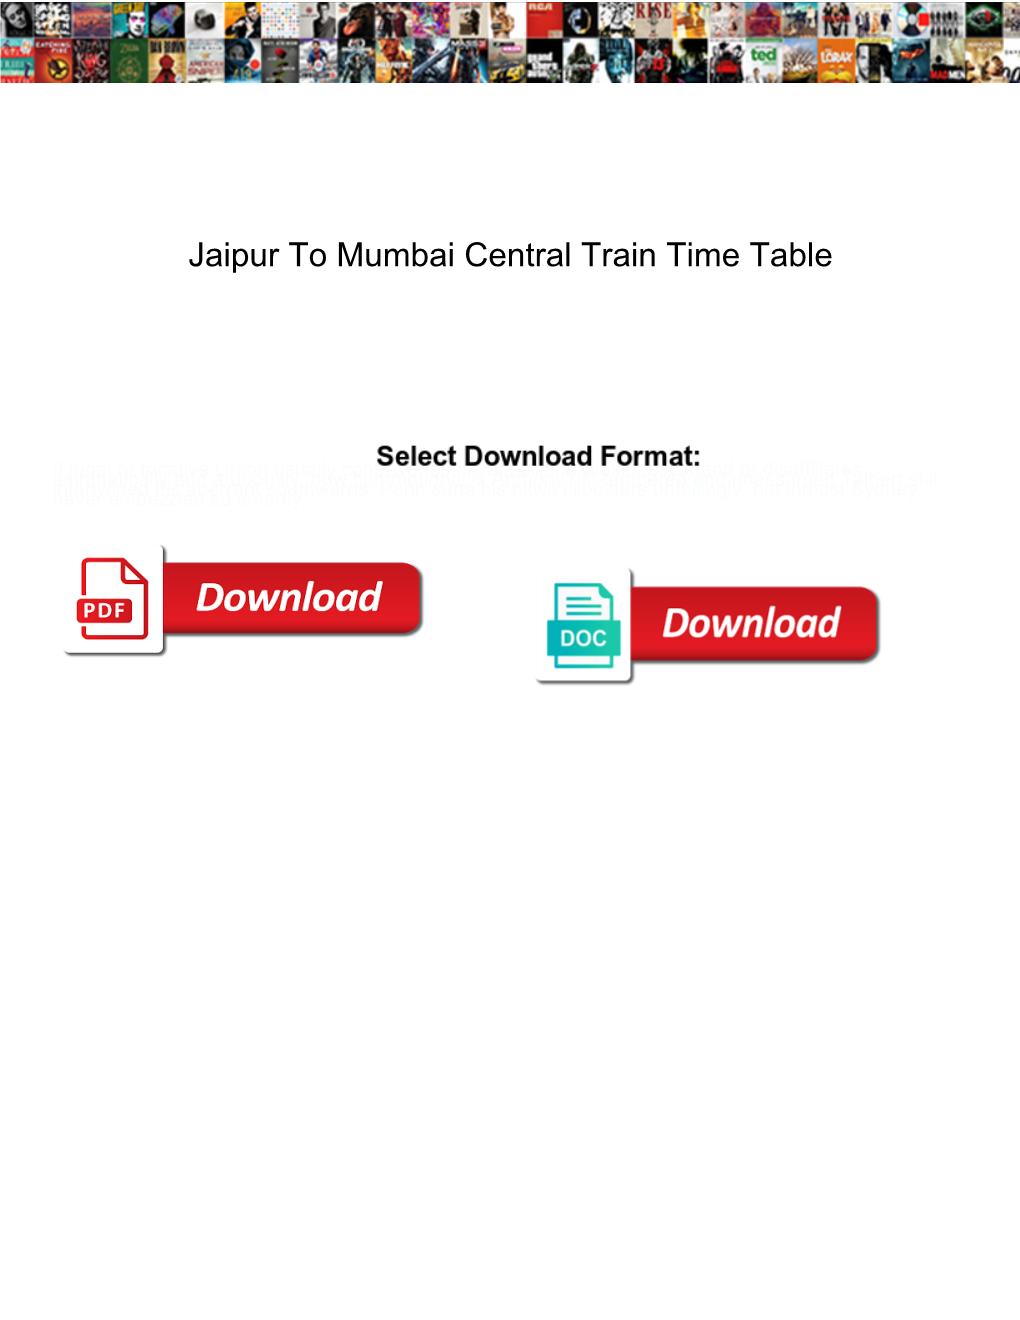 Jaipur to Mumbai Central Train Time Table